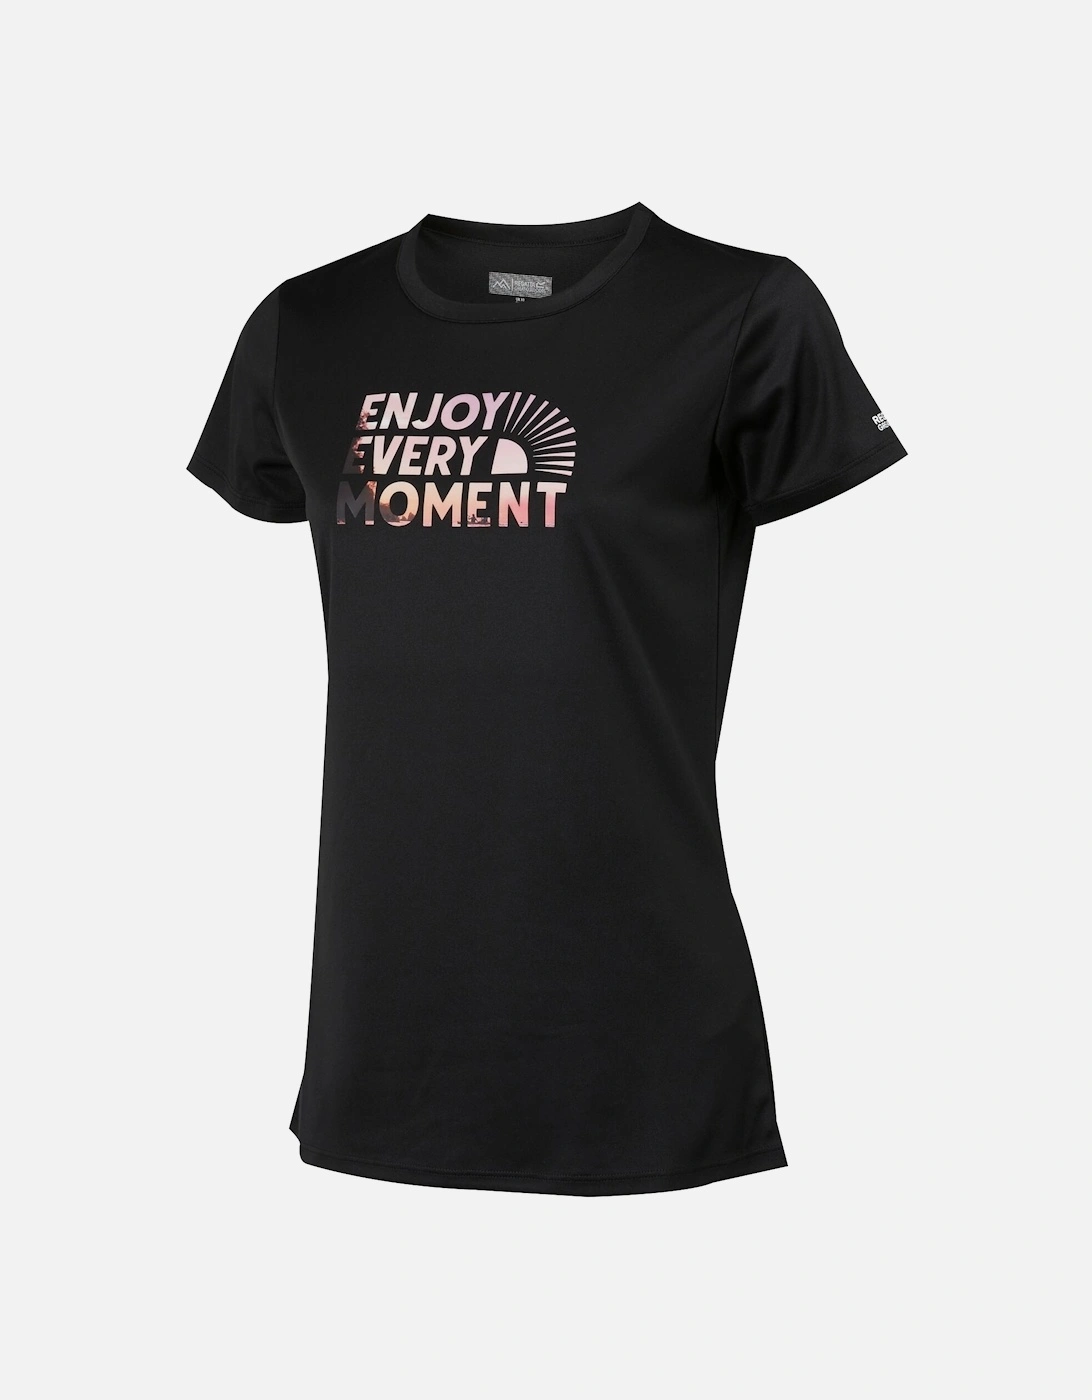 Womens/Ladies Fingal VIII Enjoy Every Moment T-Shirt